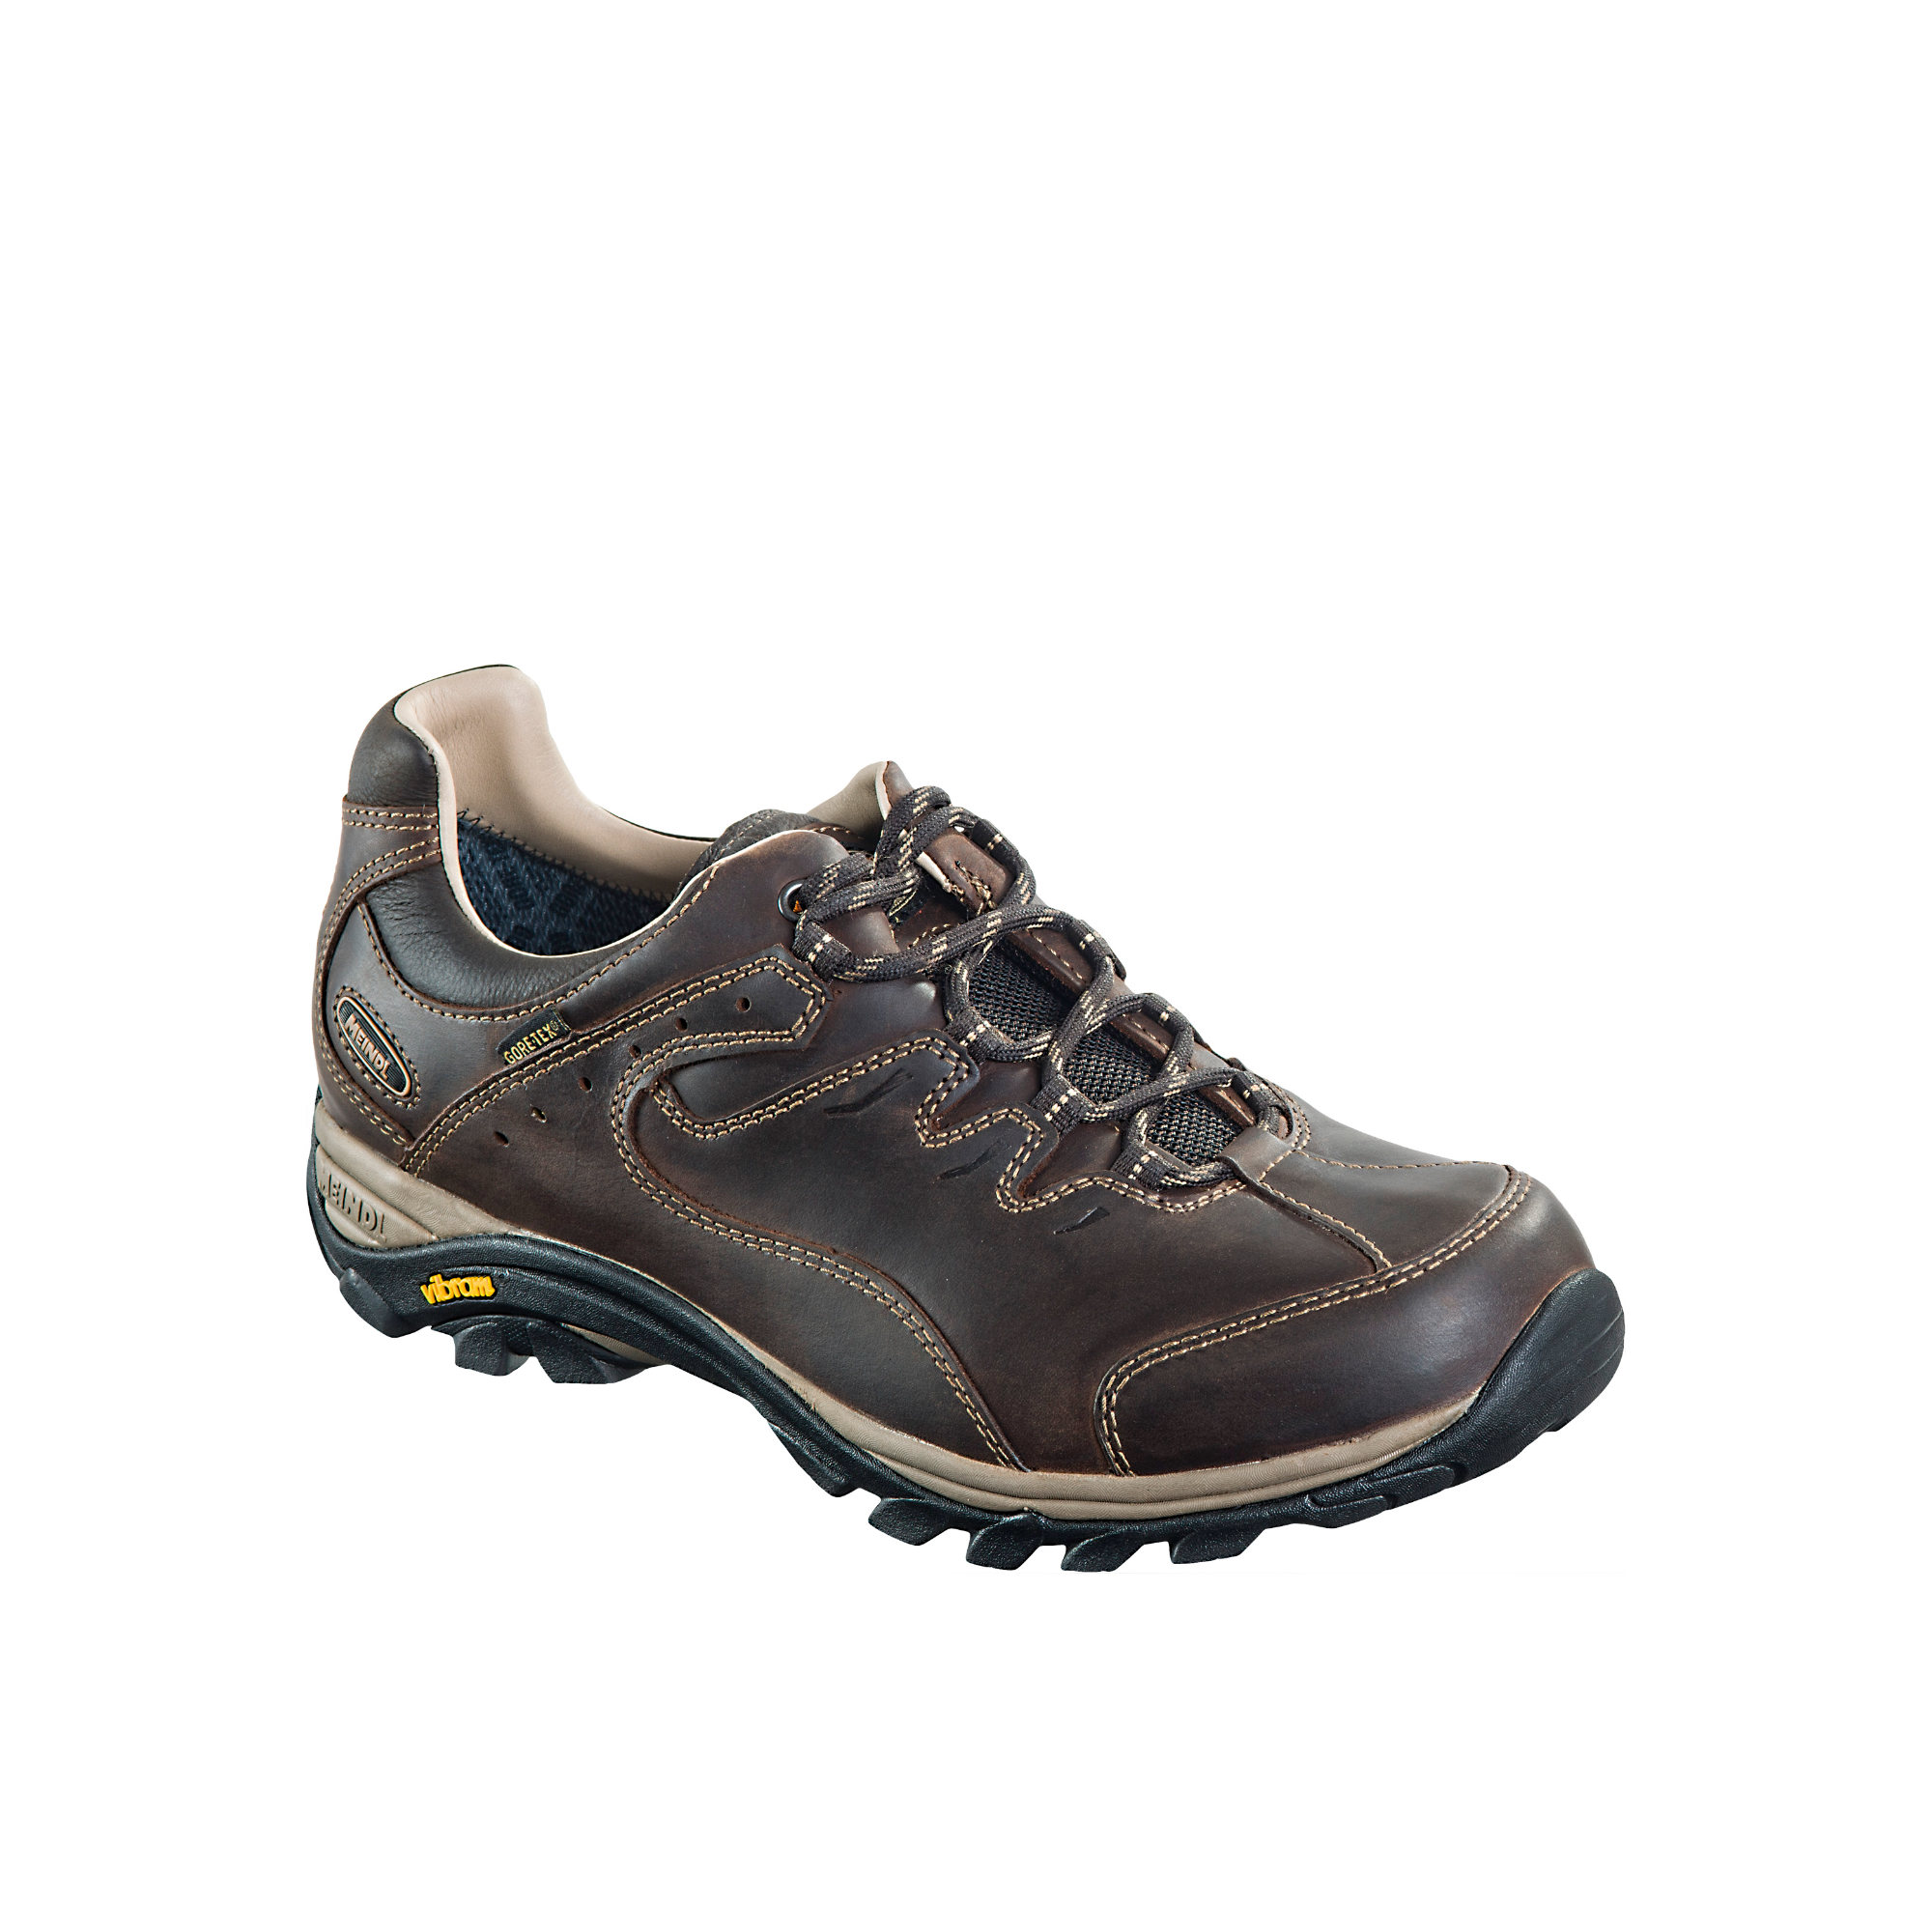 Meindl Meindl Caracas GTX Size 9 Hiking Walking Shoes Trainers Goretex Vibram 